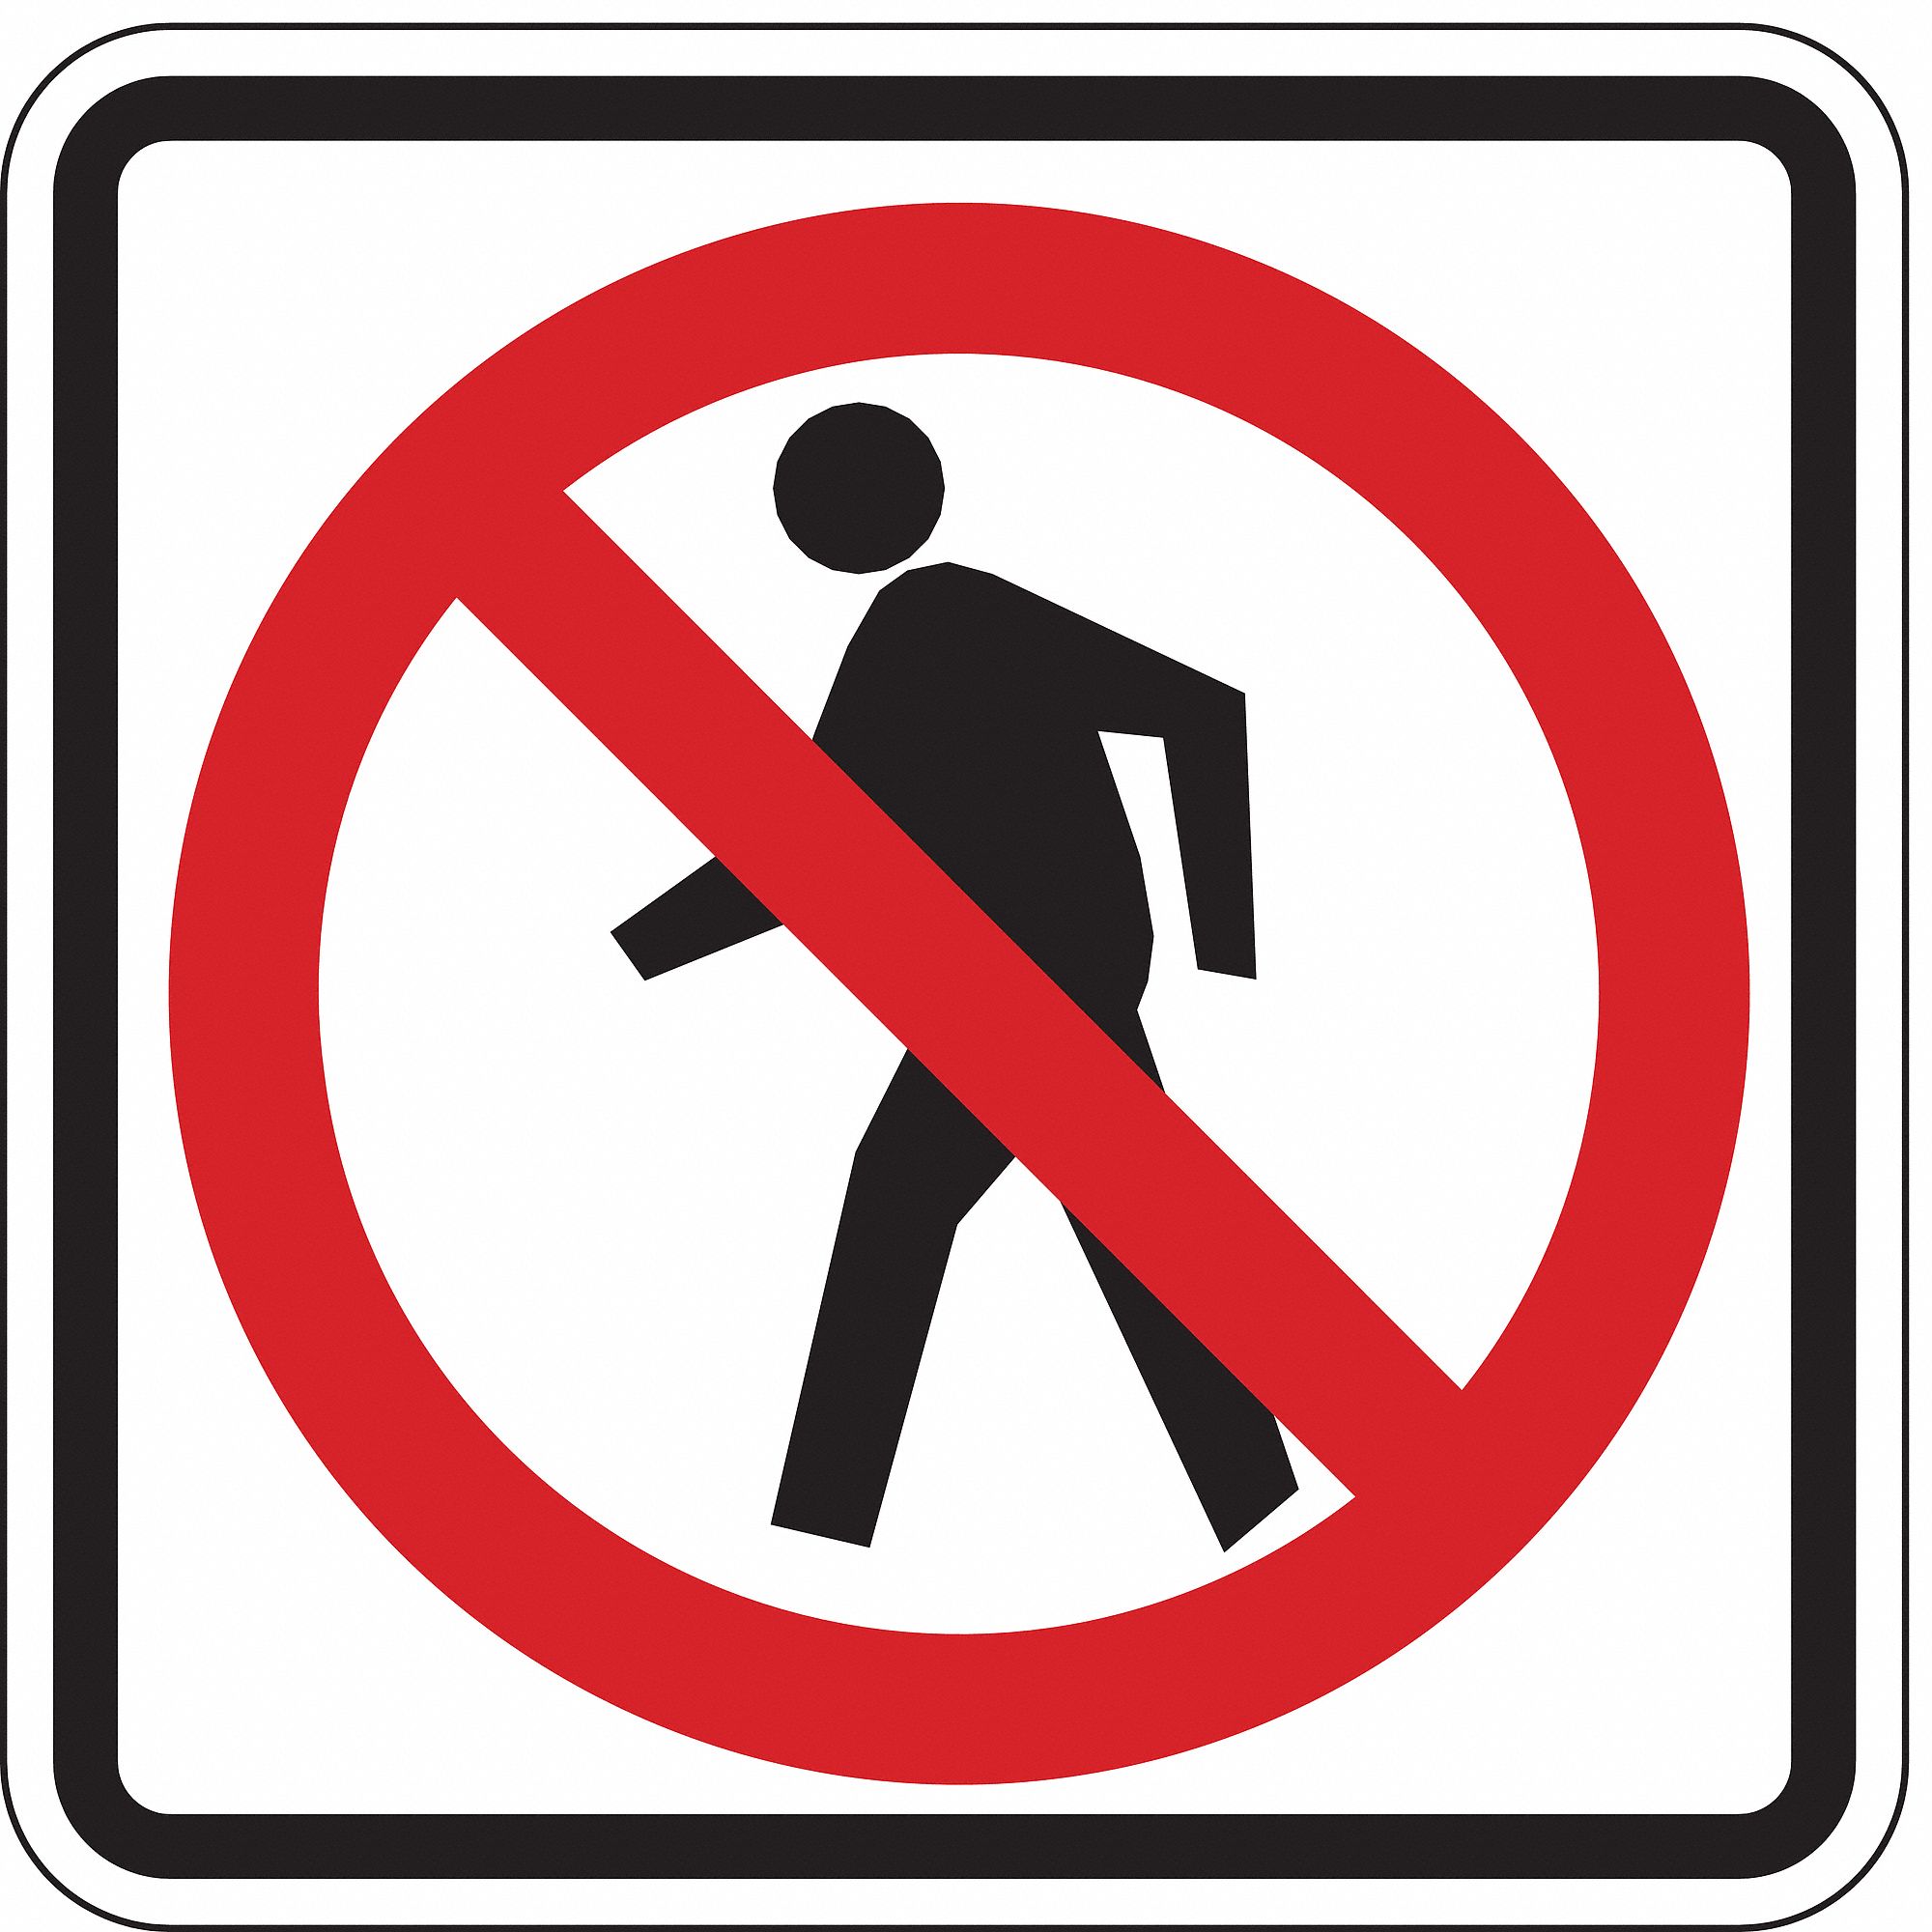 Lyle No Pedestrian Crossing Pictogram Traffic Sign Mutcd Code R9 3 24 In X 24 In 3pmh2 R9 3a 24ha Grainger